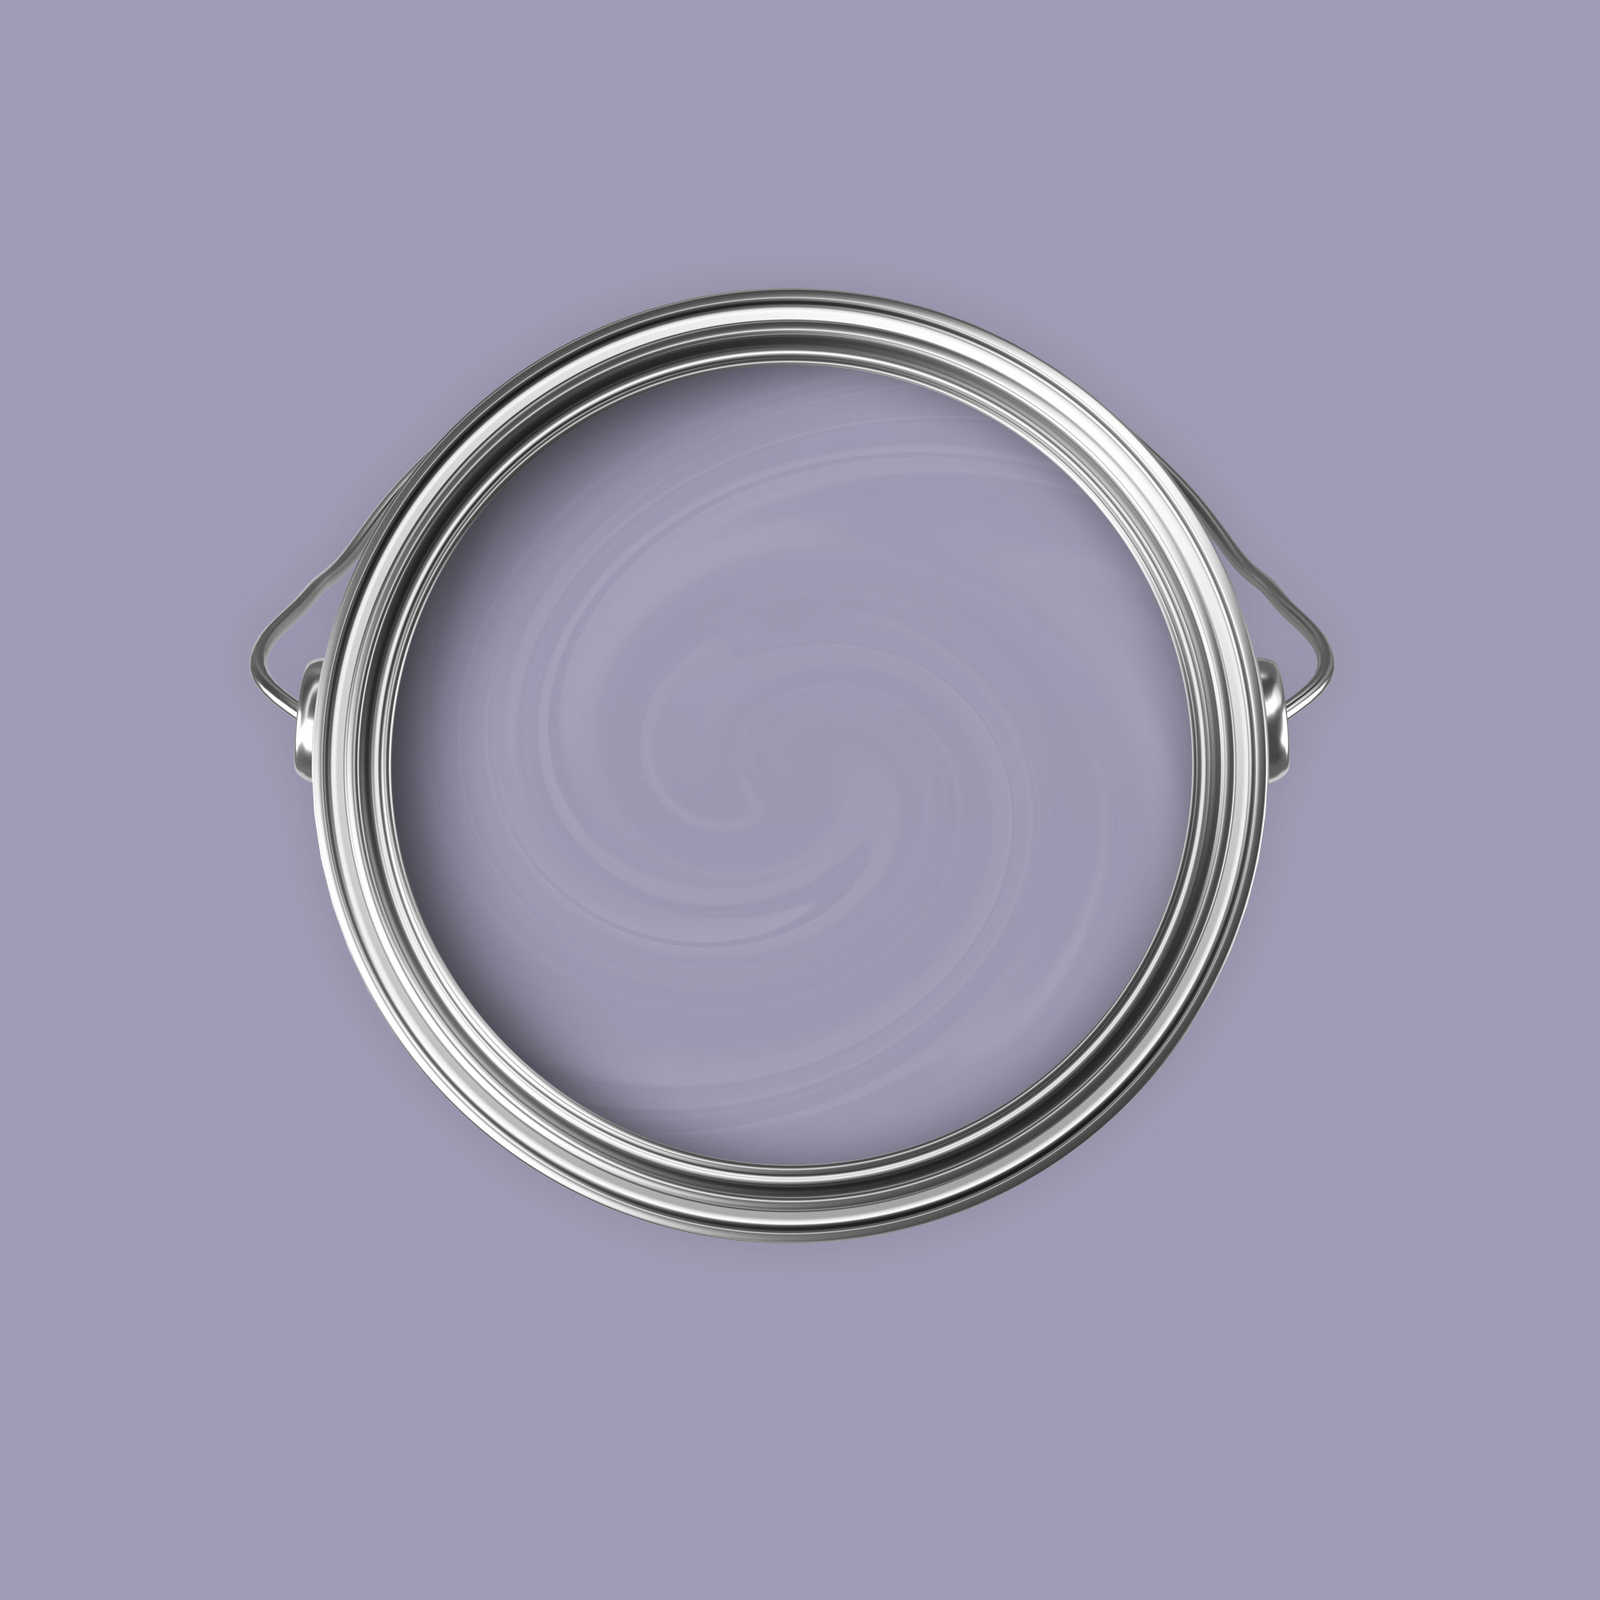             Premium Muurverf gevoelig lila »Magical Mauve« NW204 – 5 liter
        